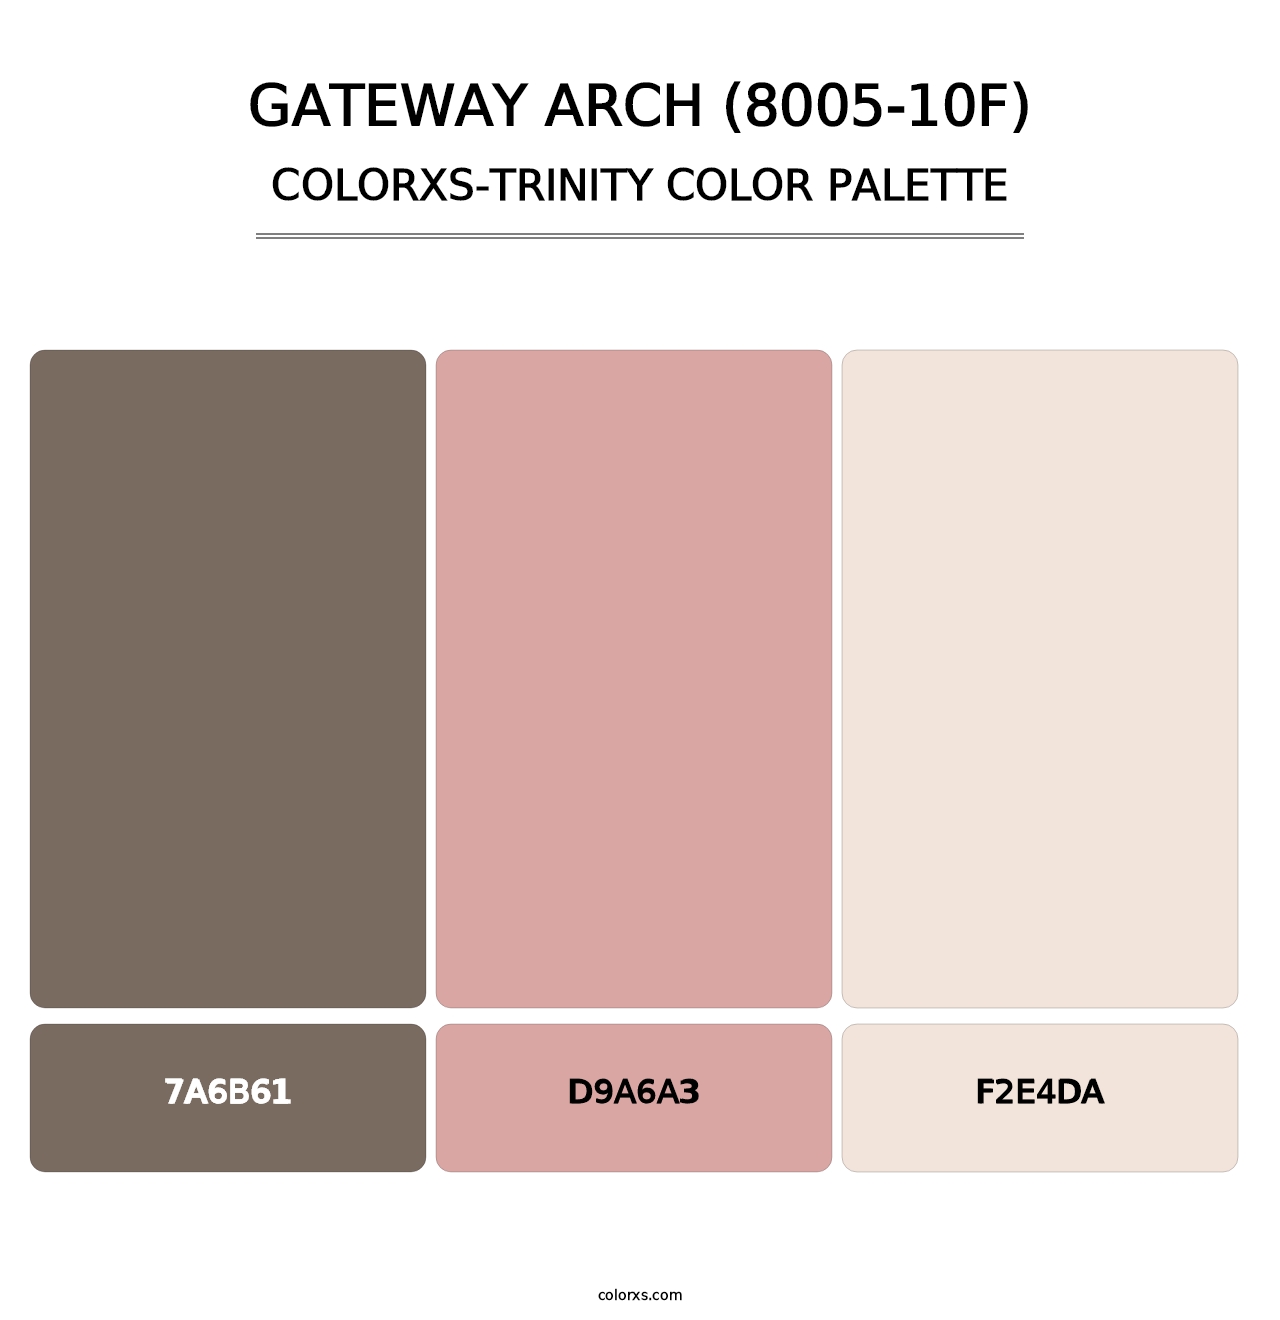 Gateway Arch (8005-10F) - Colorxs Trinity Palette